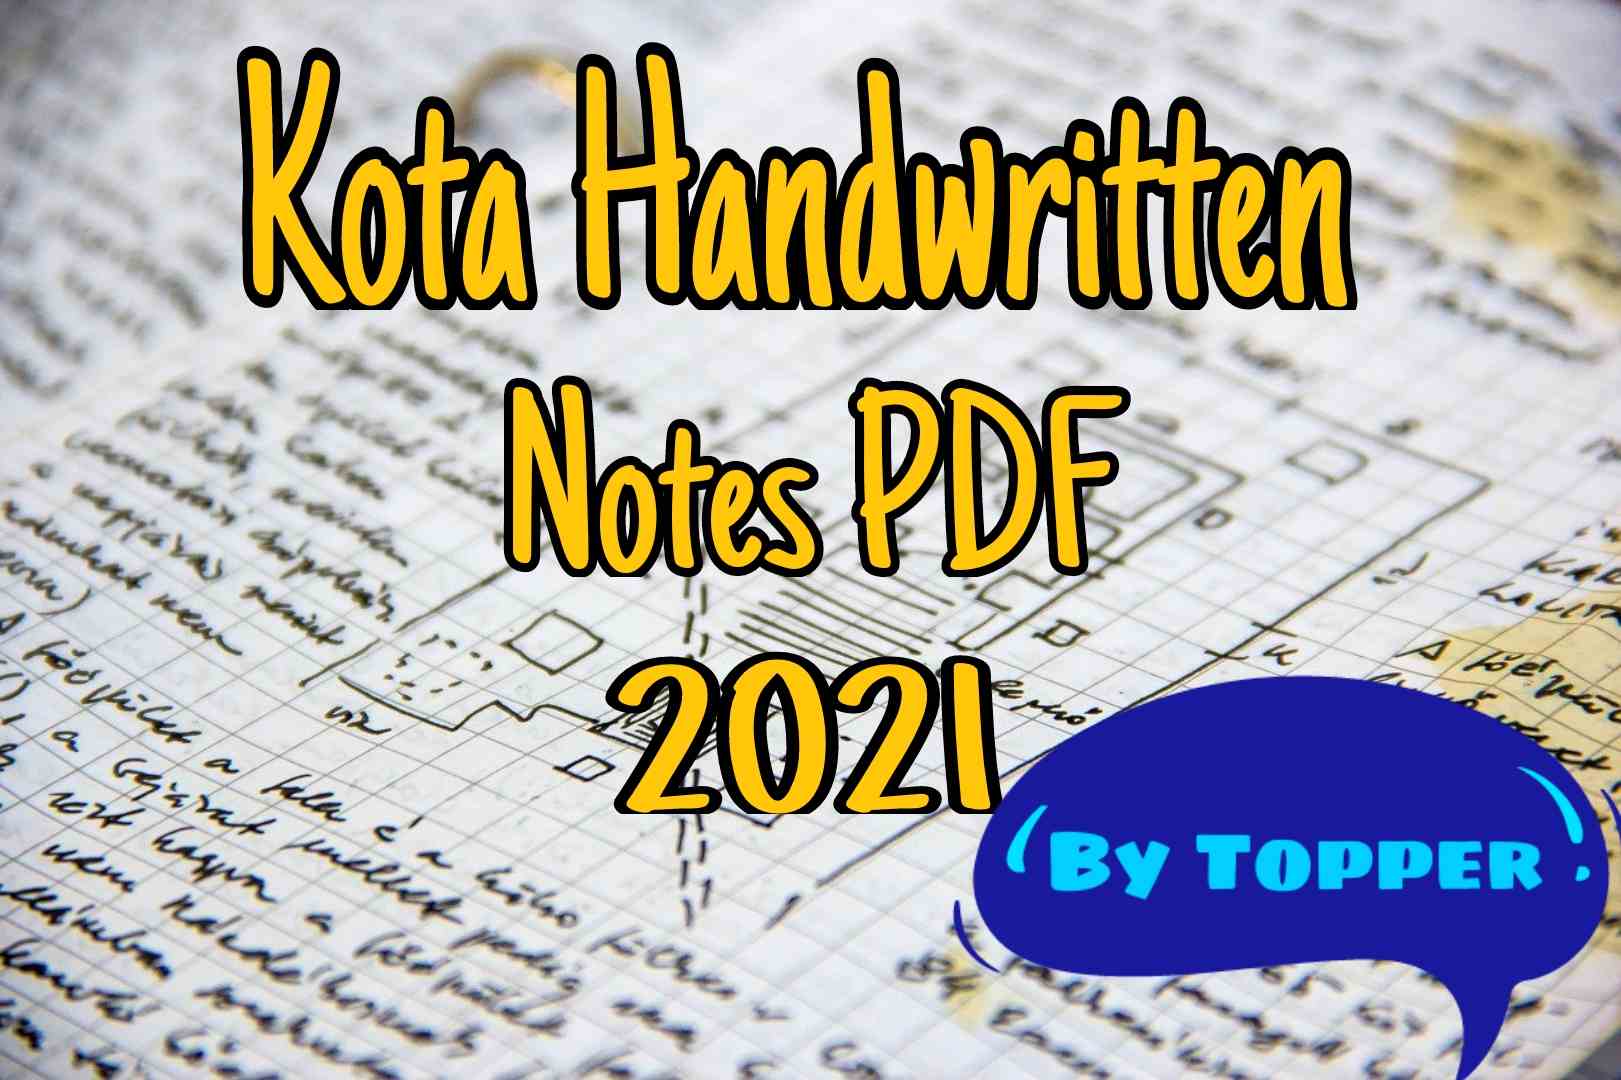 Kota Handwritten Notes PDF 2021 - PDF Study Materials